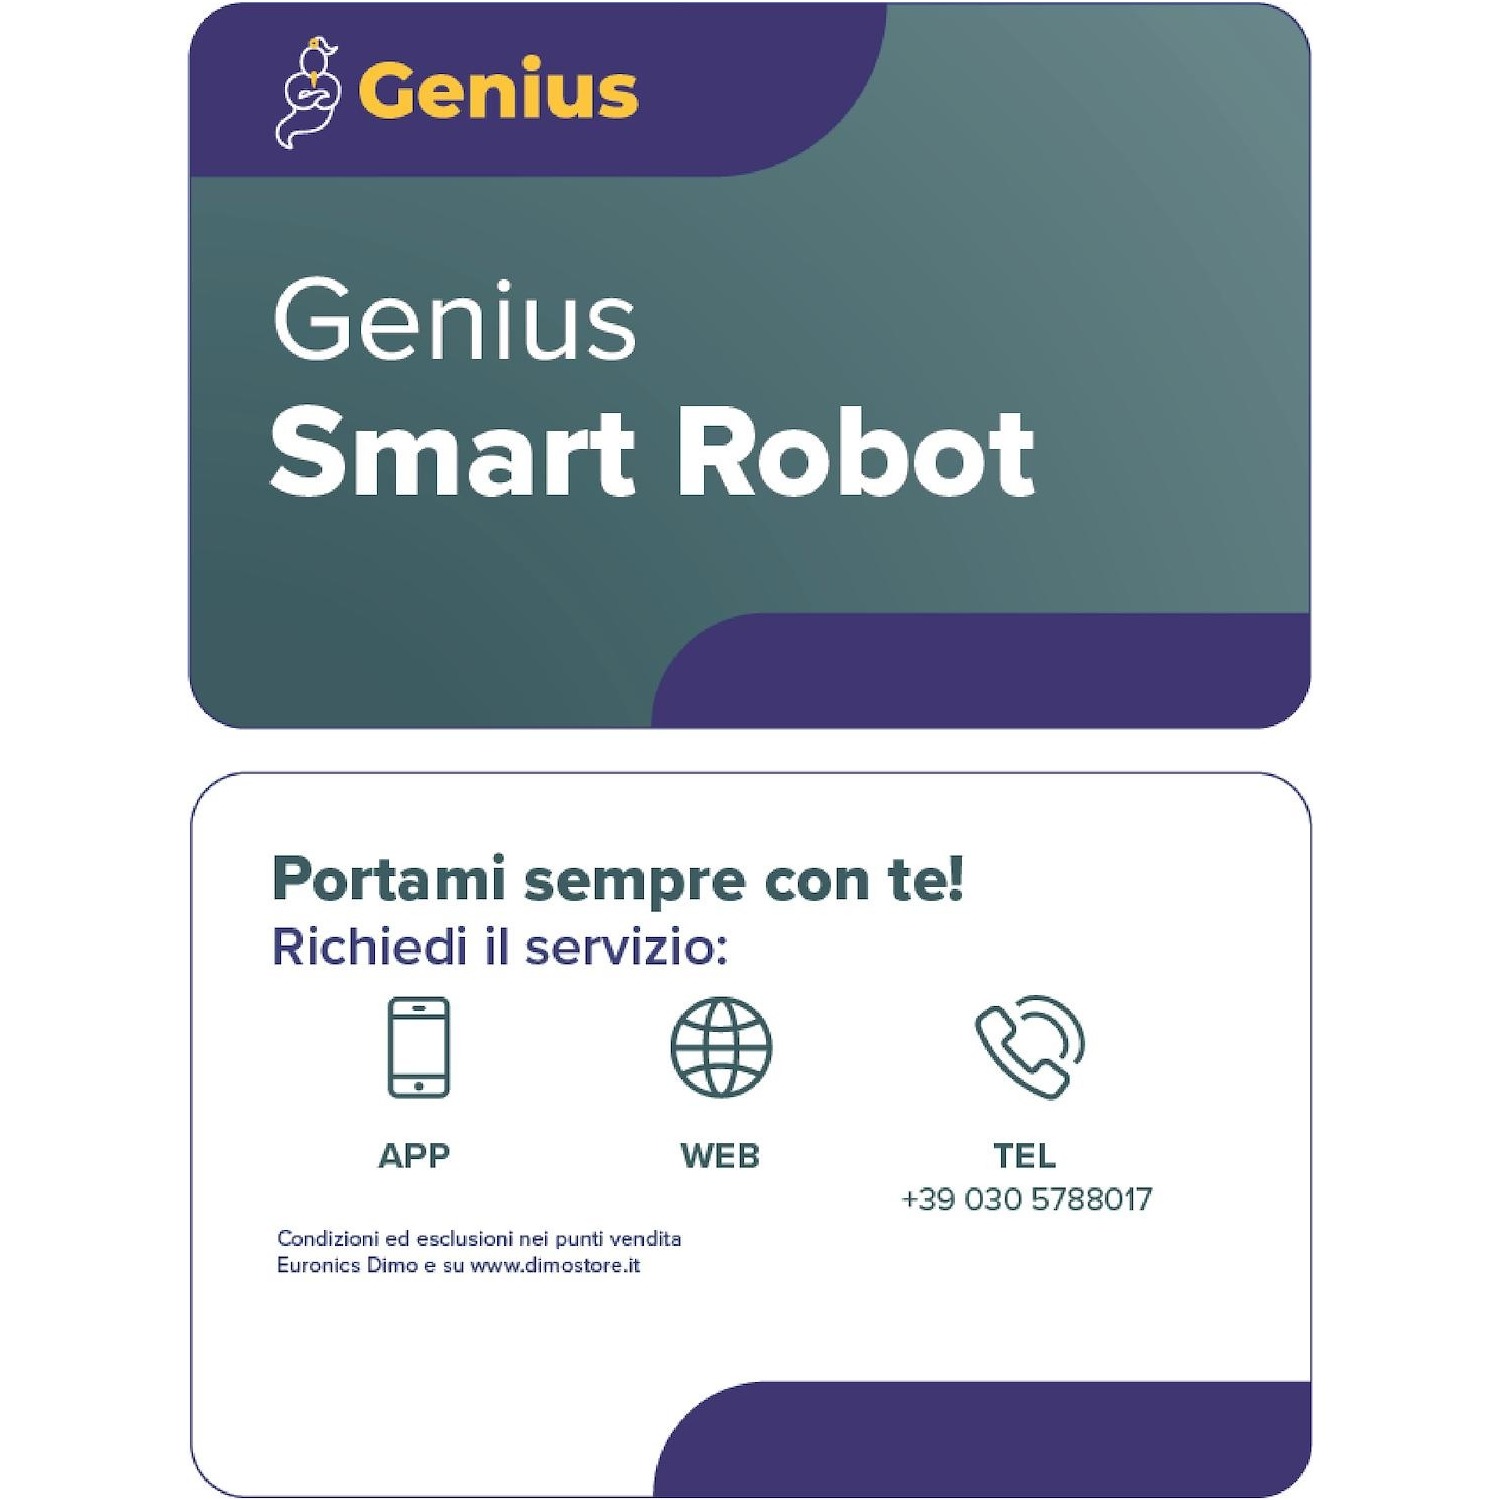 Immagine per Genius Smart Robot da DIMOStore